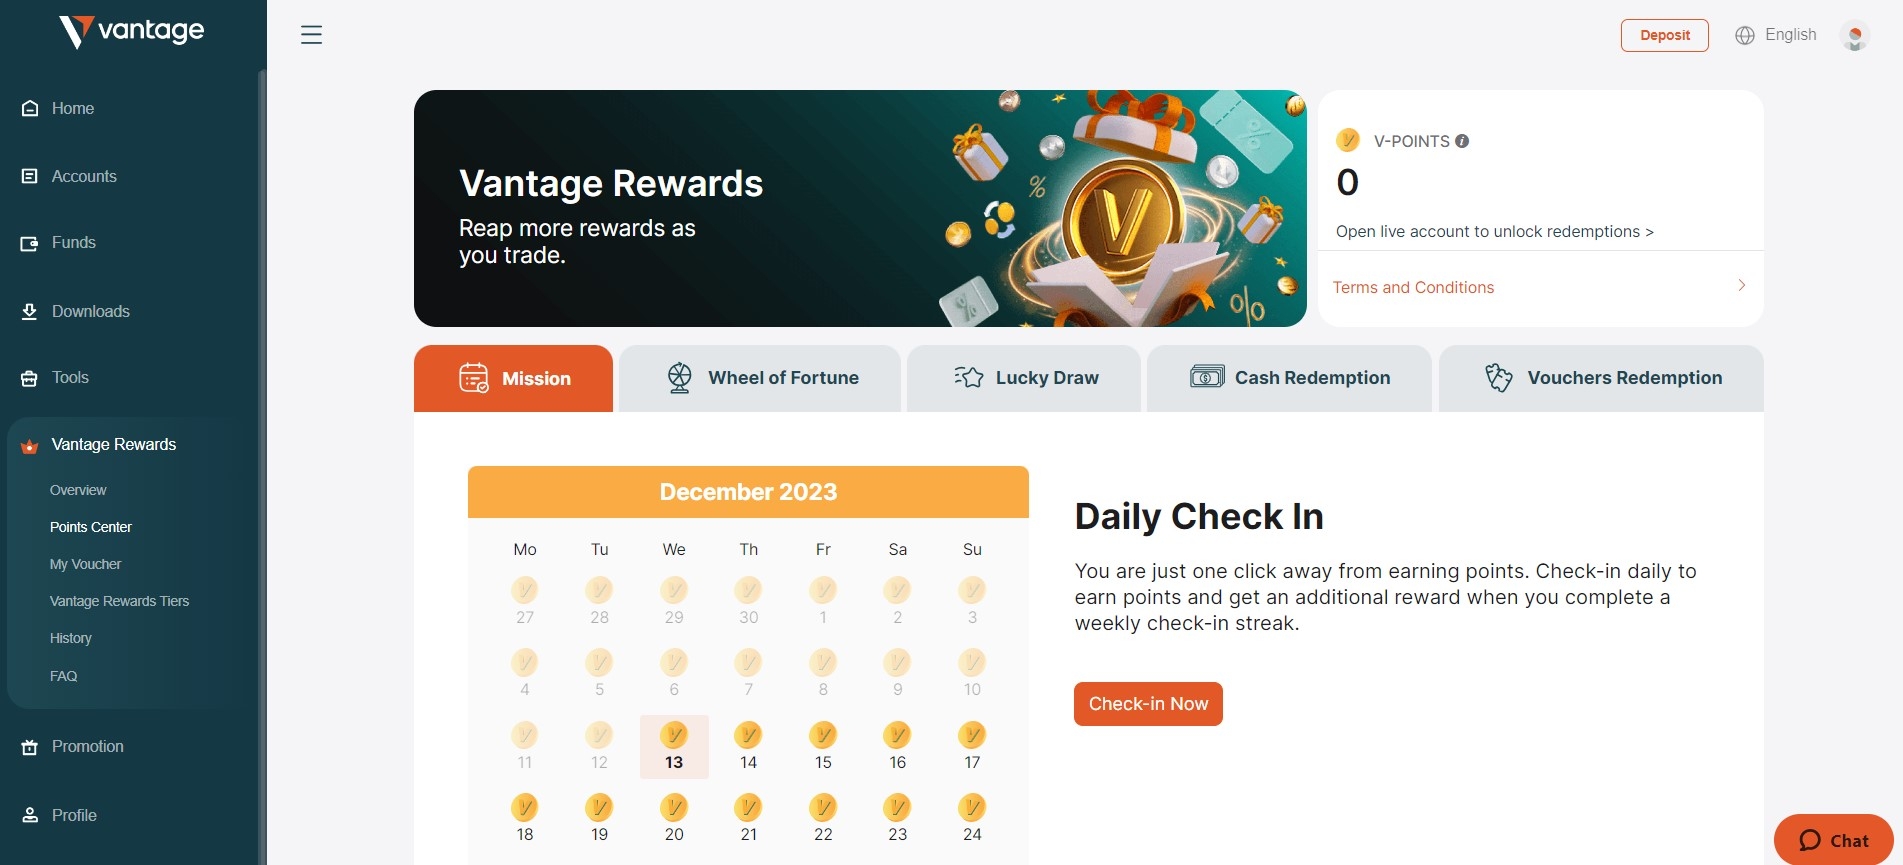 Vantage Rewards in the client portal